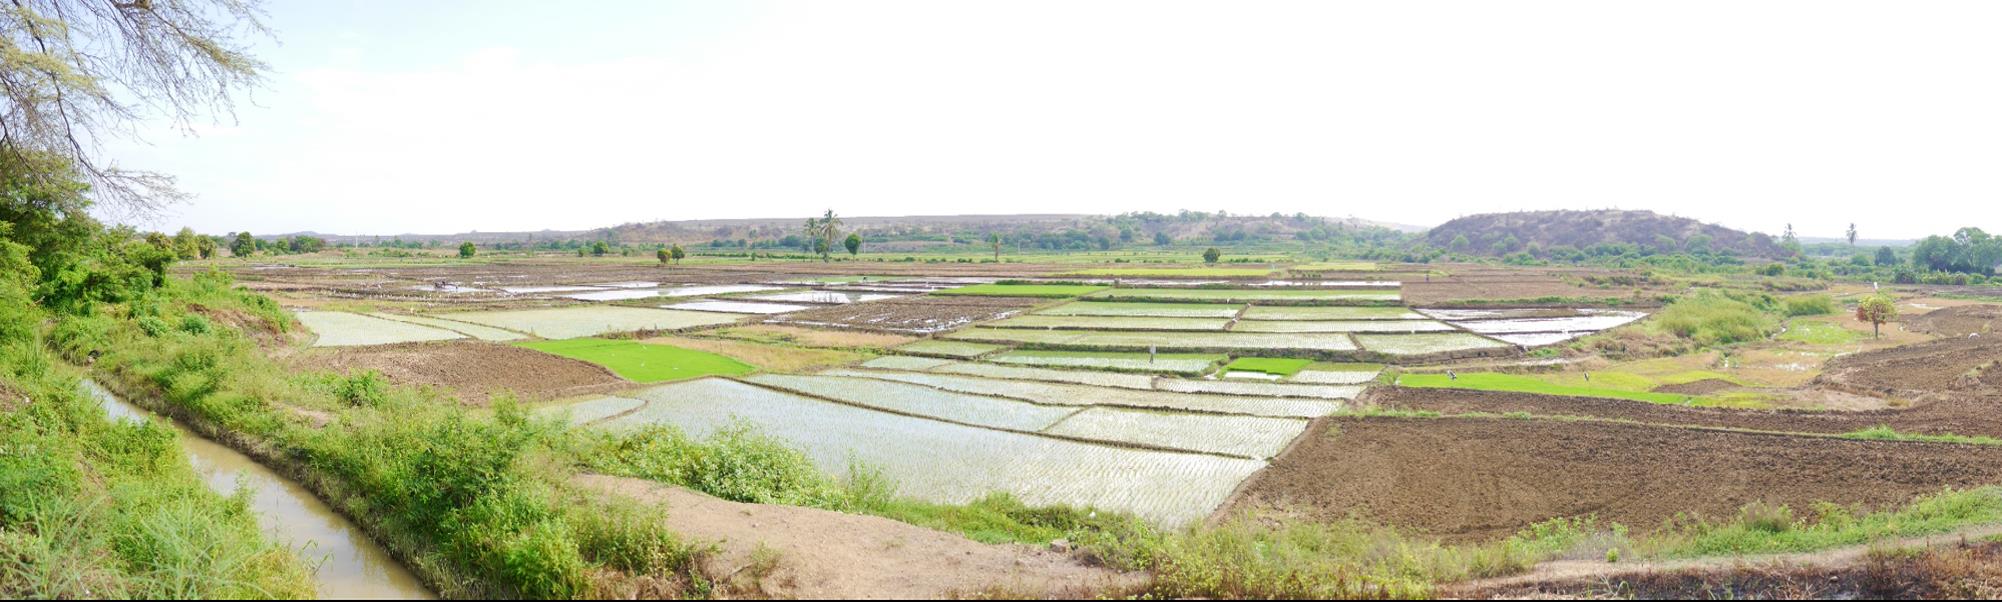 Panoramic view of rice fields